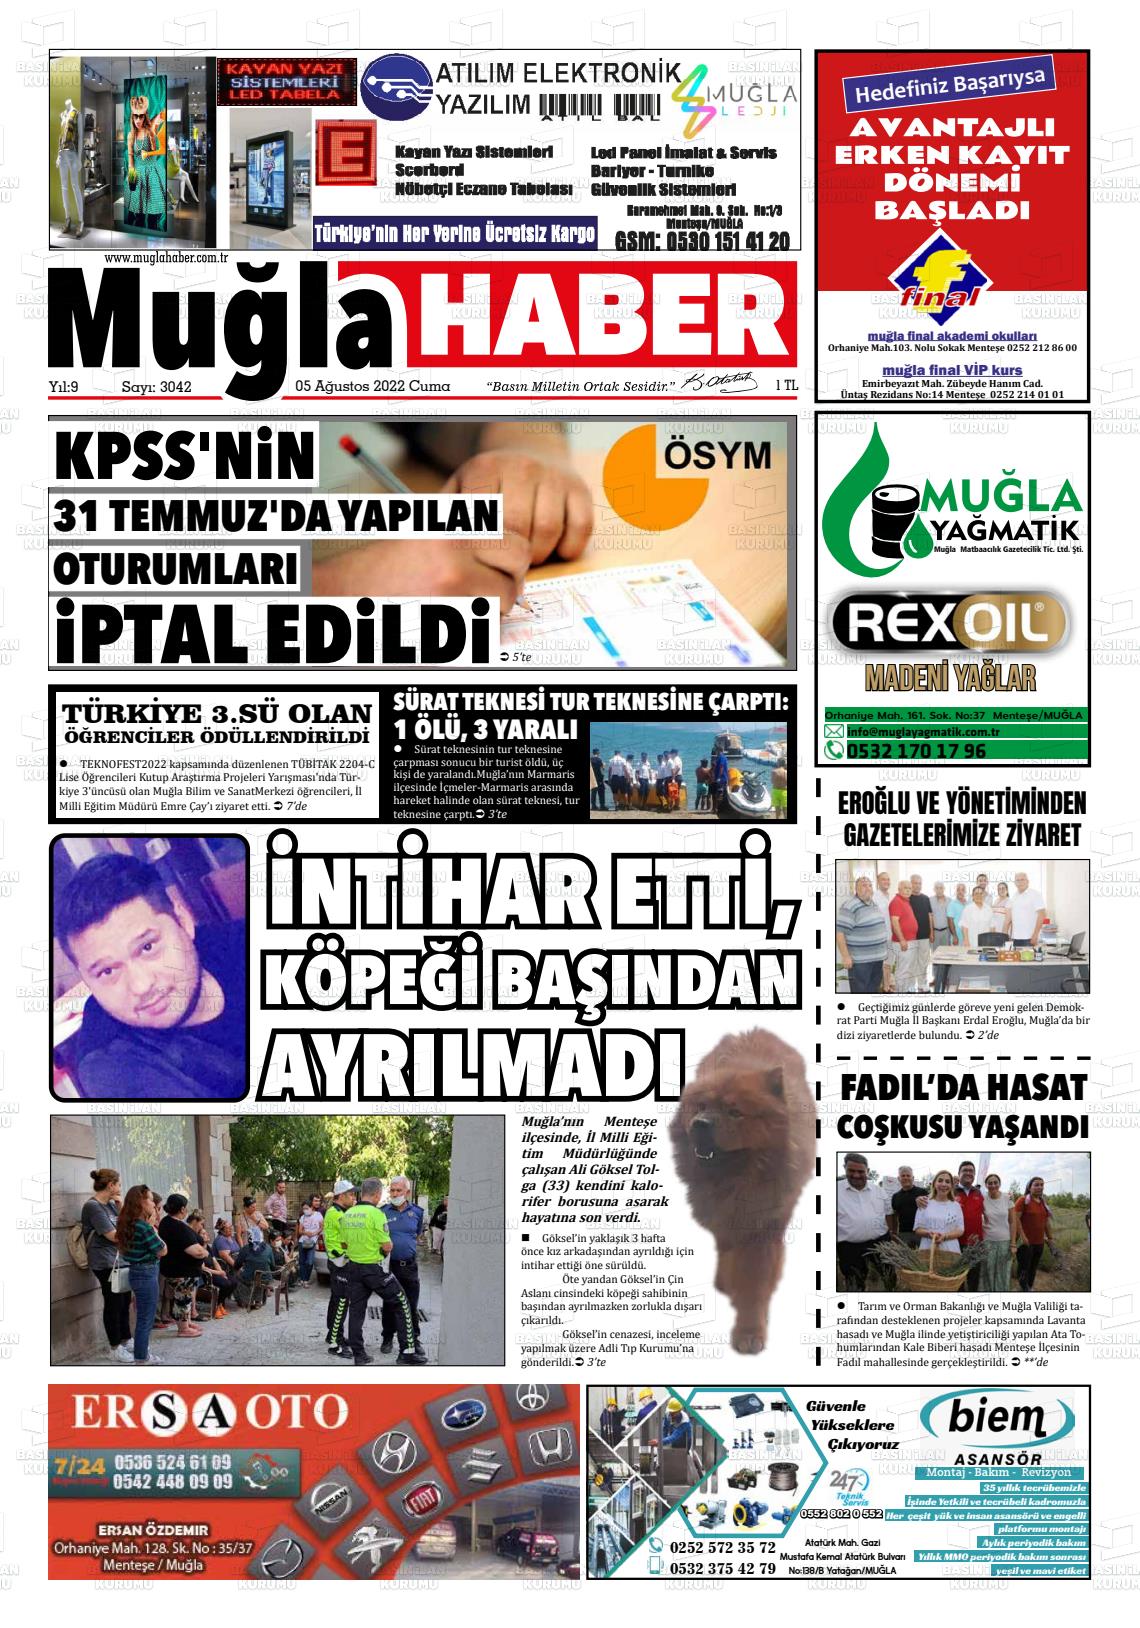 05 Ağustos 2022 Muğla Haber Gazete Manşeti